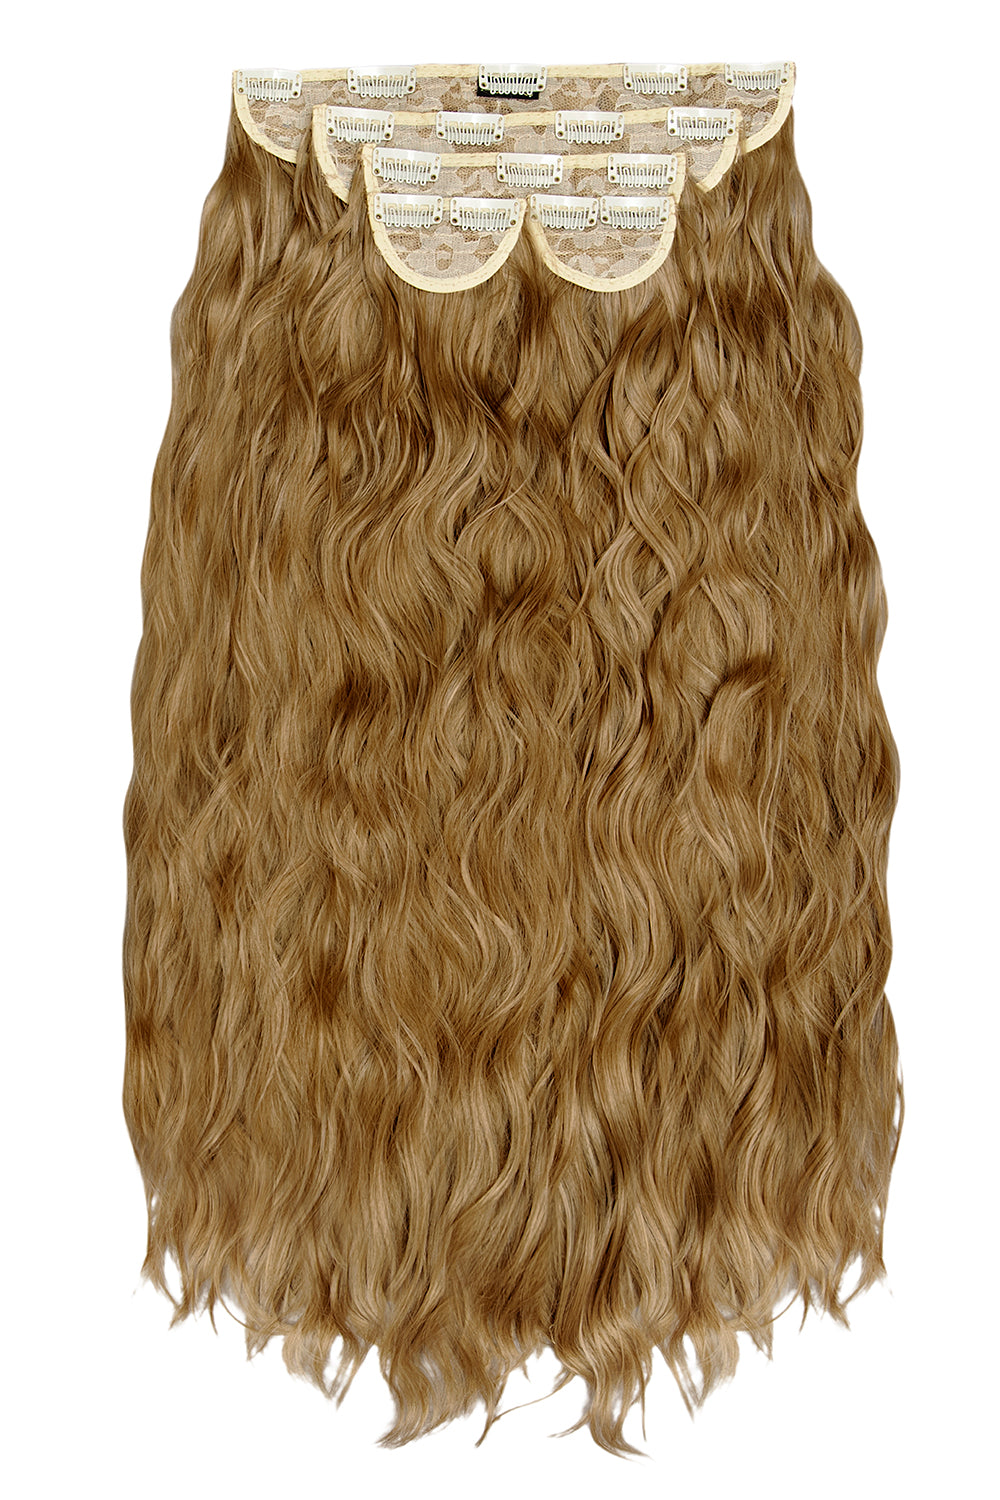 Super Thick 26" 5 Piece Waist Length Wave Clip In Hair Extensions - LullaBellz  - Harvest Blonde Festival Hair Inspiration